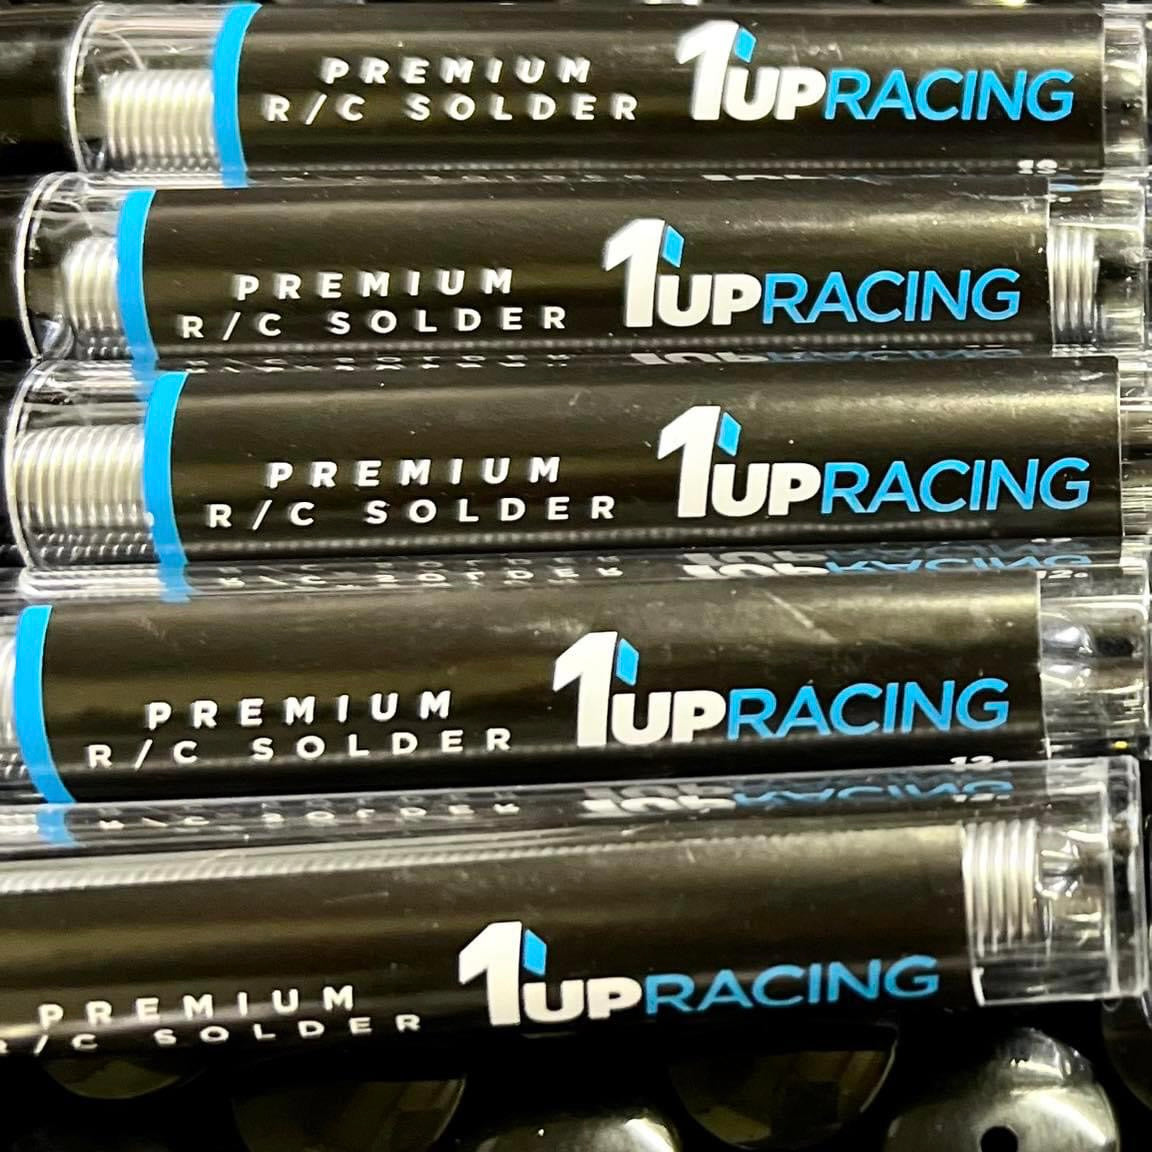 Premium Solder Back in stock at 1up Racing